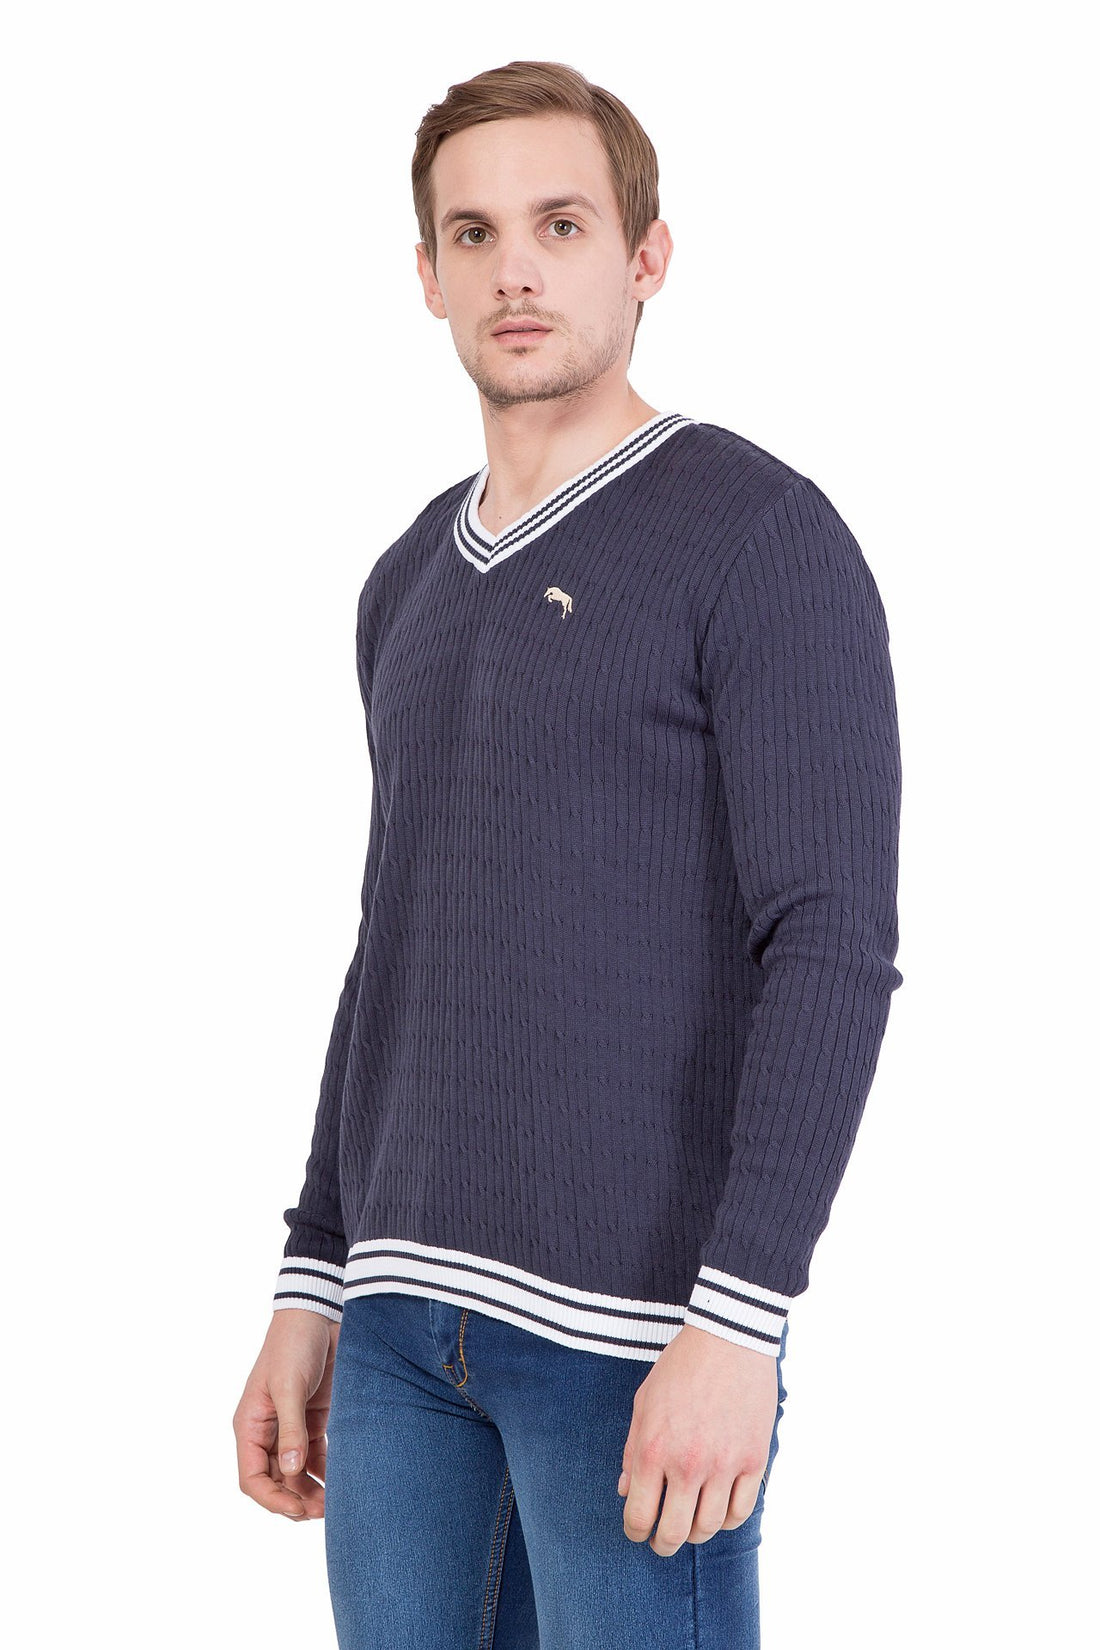 Men Full Sleeve Sweater - JUMP USA (1568784318506)